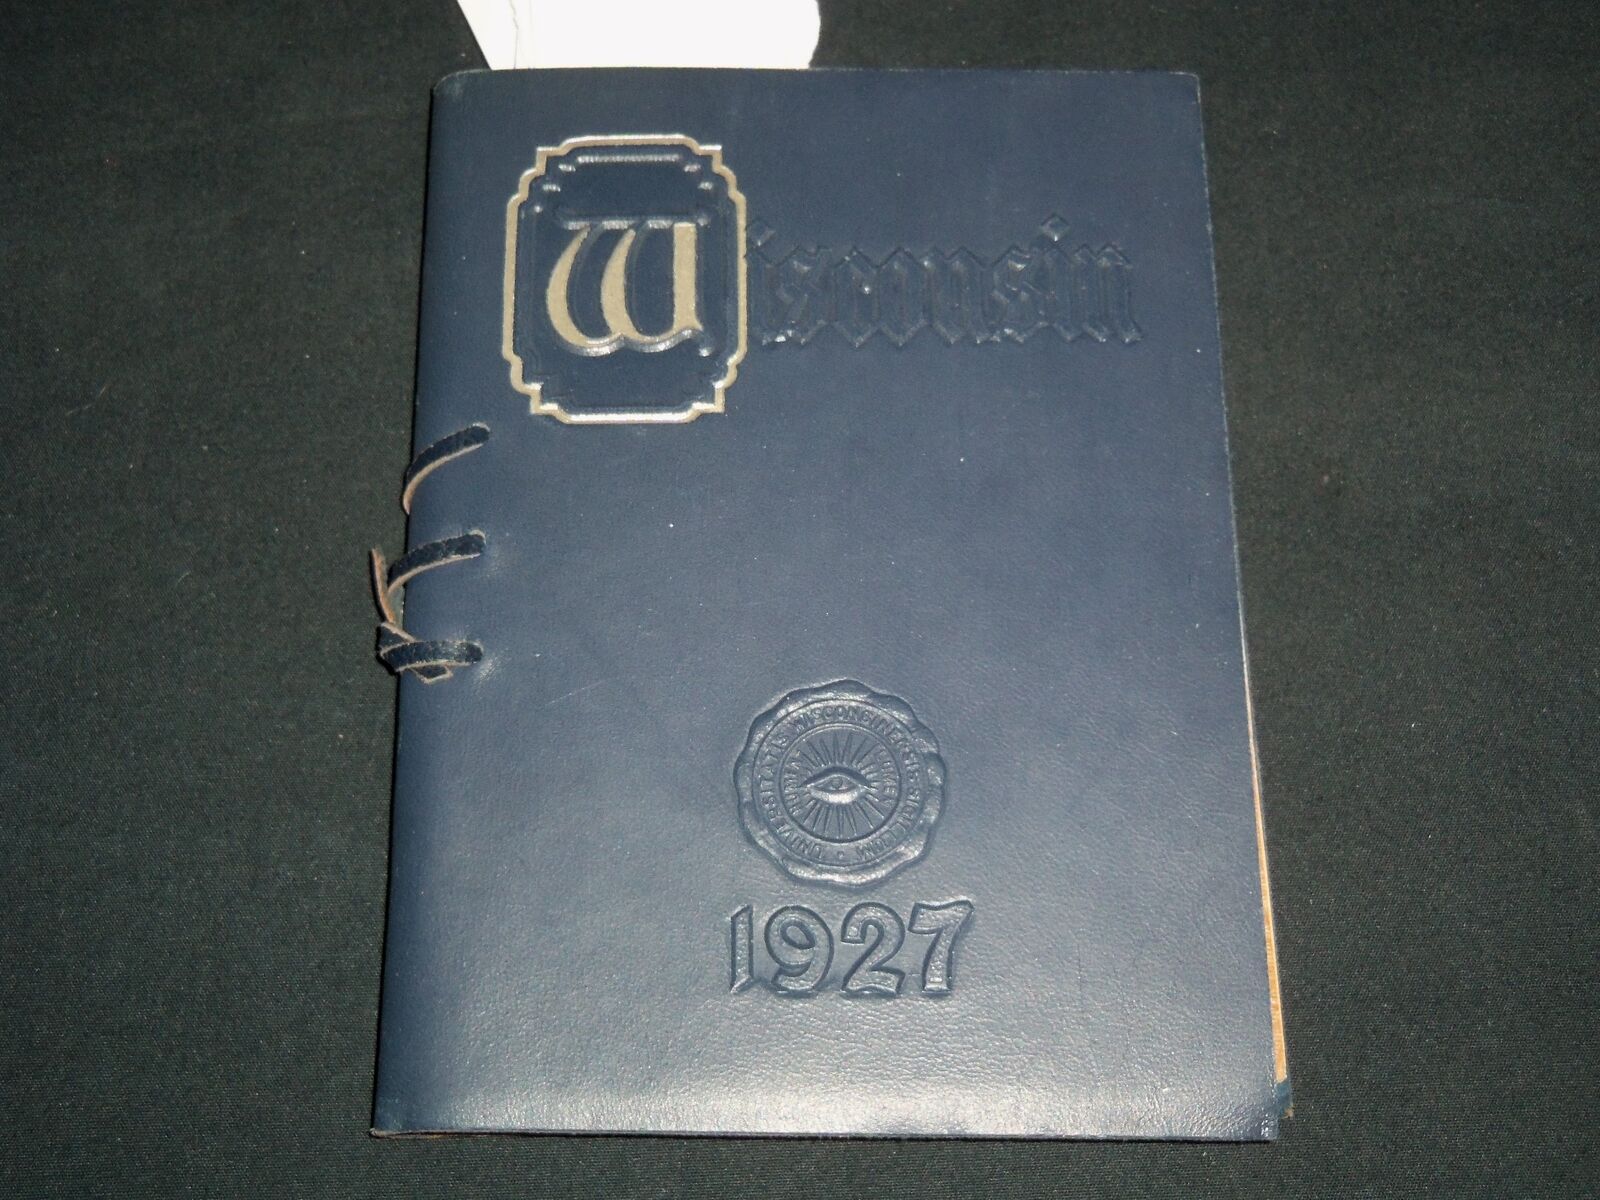 1927 WISCONSIN COMMENCEMENT WEEK BOOK - J 9021